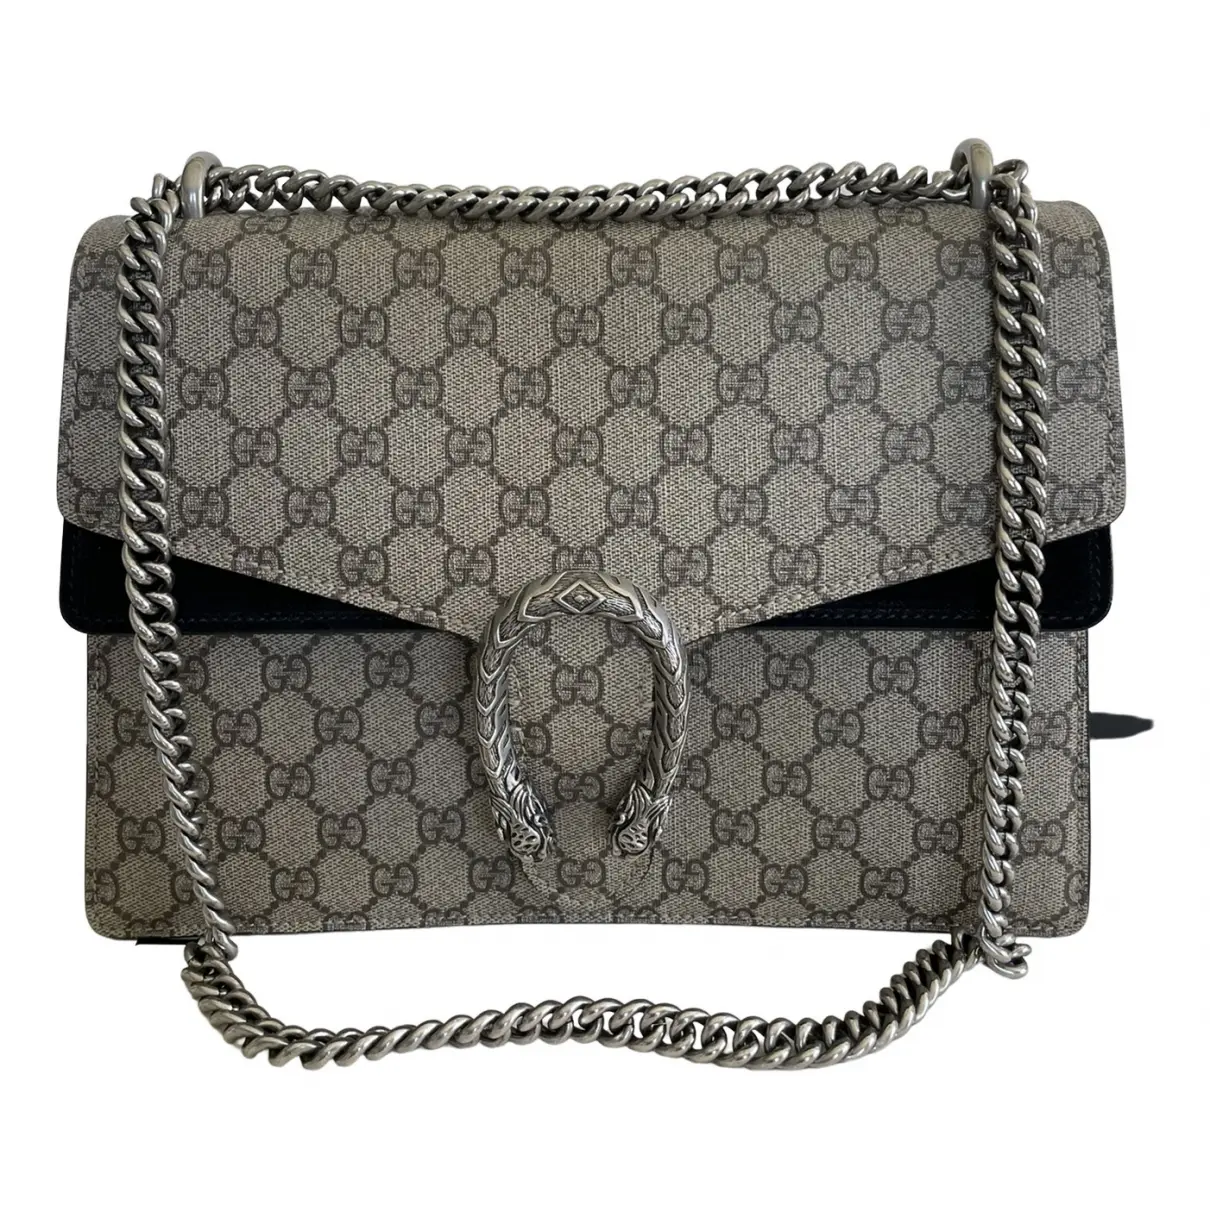 Dionysus handbag Gucci